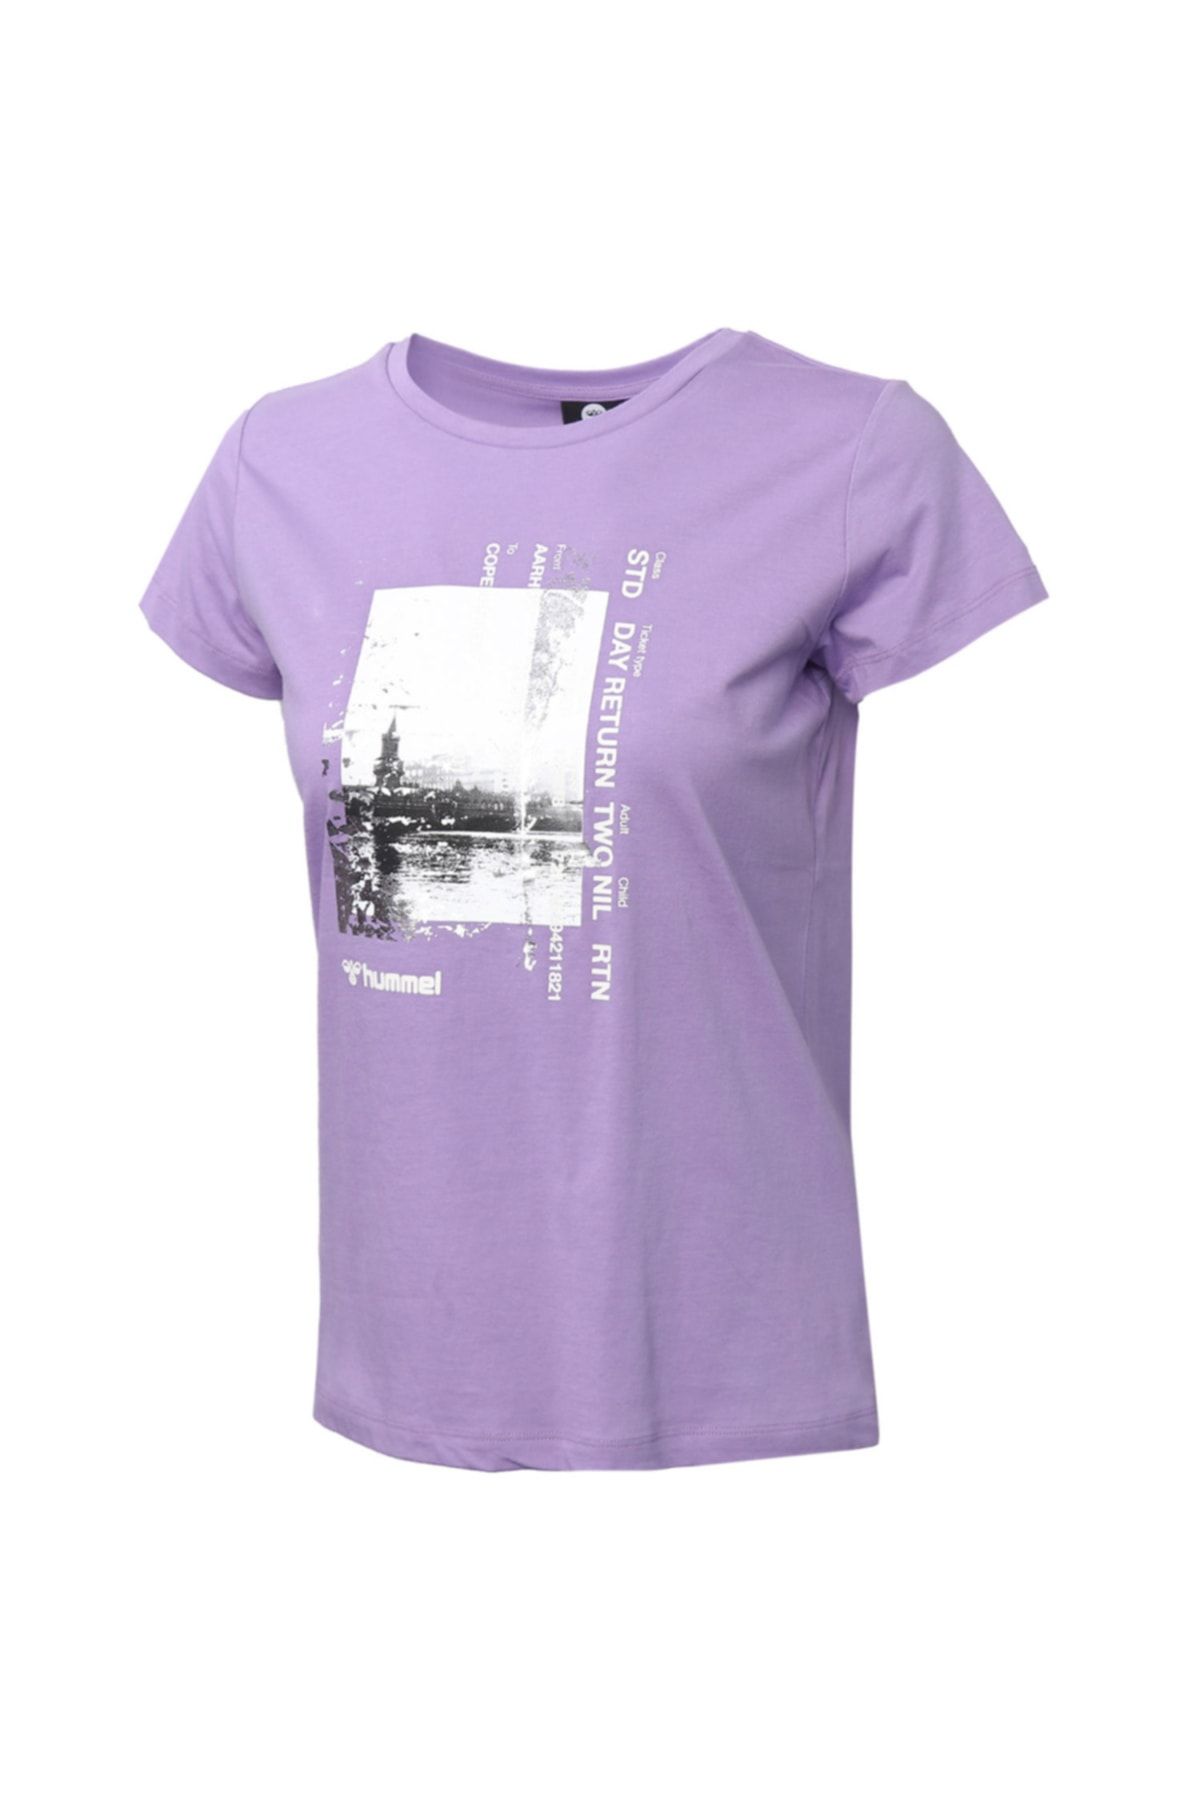 hummel 911490-2102 Hmldromme T-shırt S/s Kadın T-shirt Lavender Sılk